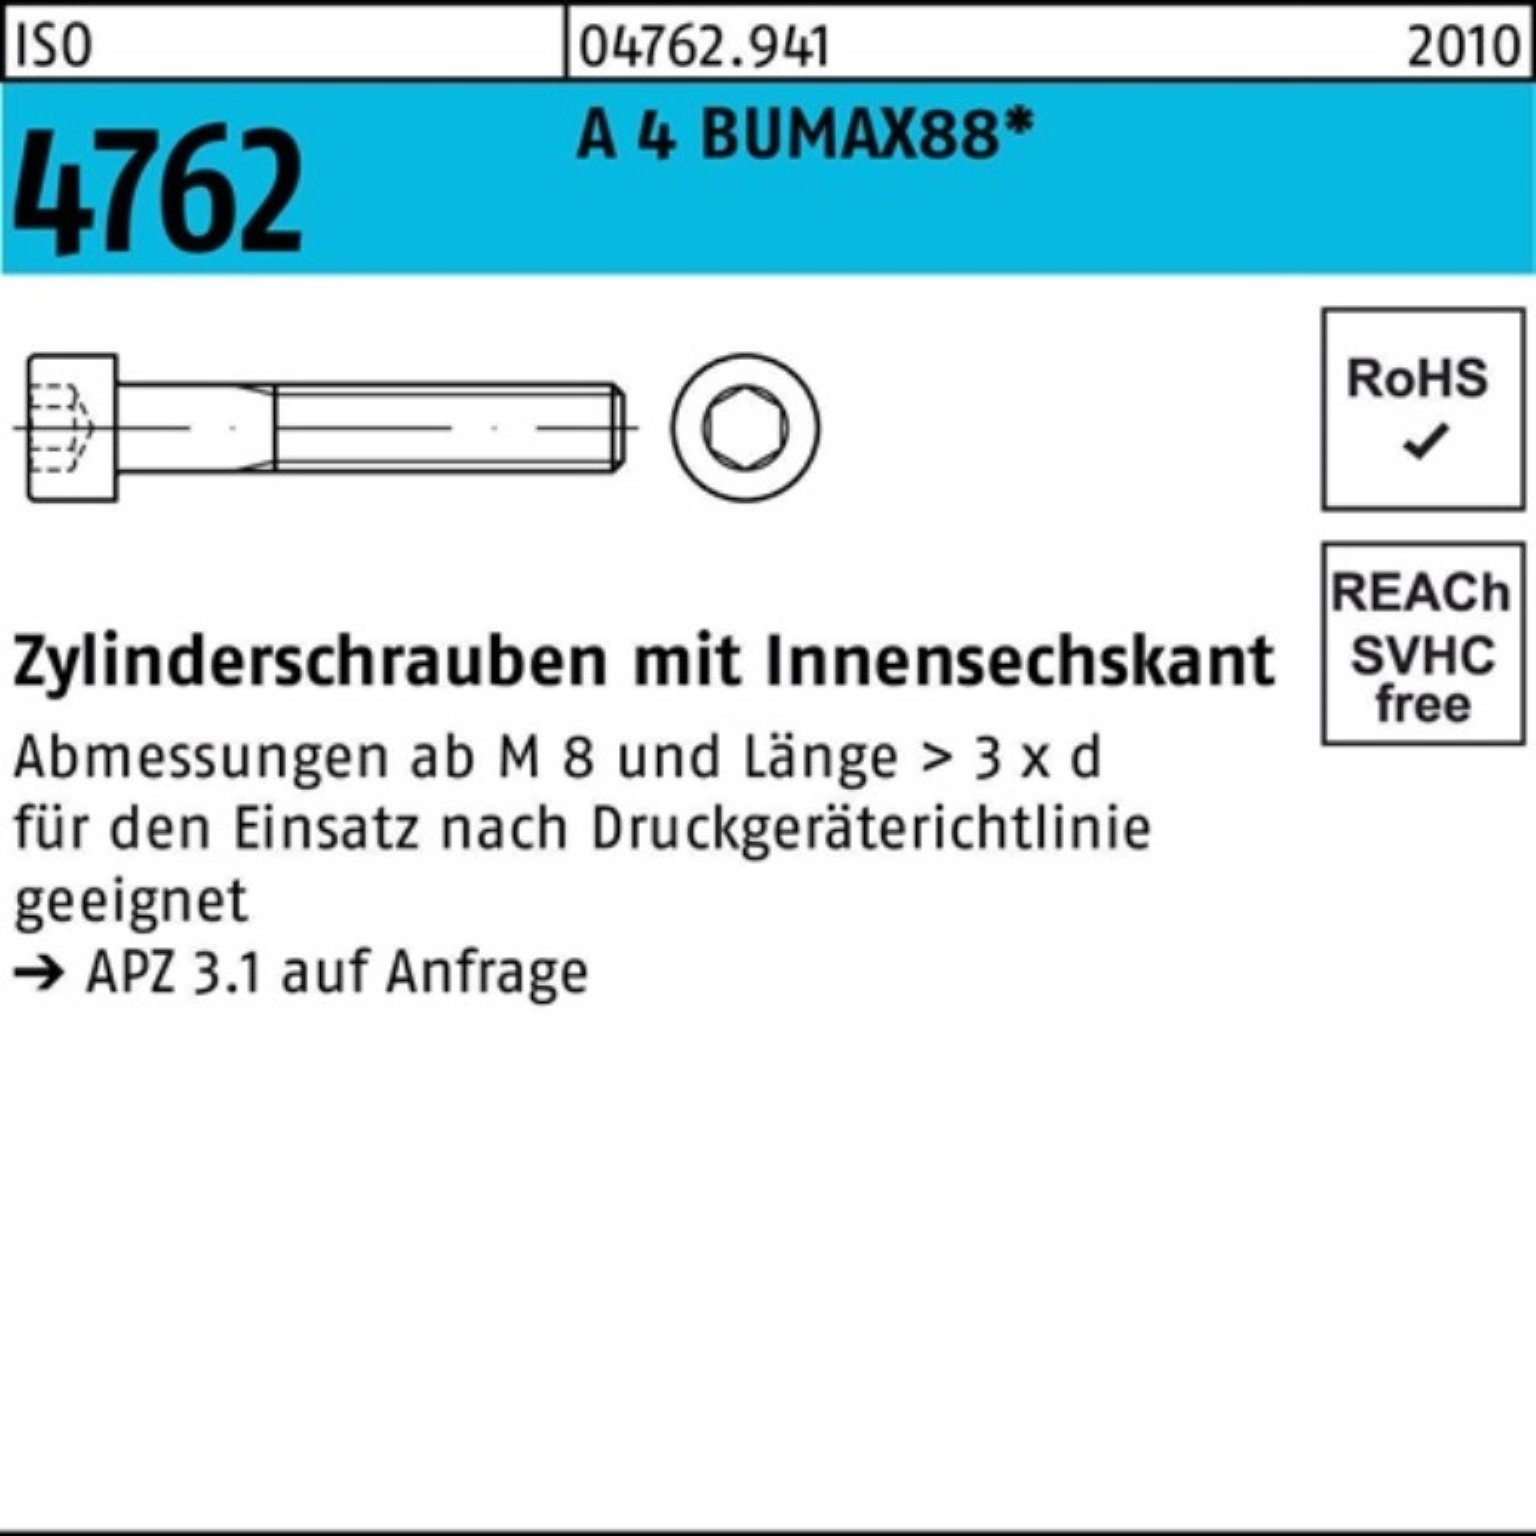 Zylinderschraube Pack Bufab ISO 100er Zylinderschraube 4 A 100 Innen-6kt 4762 40 M5x BUMAX88